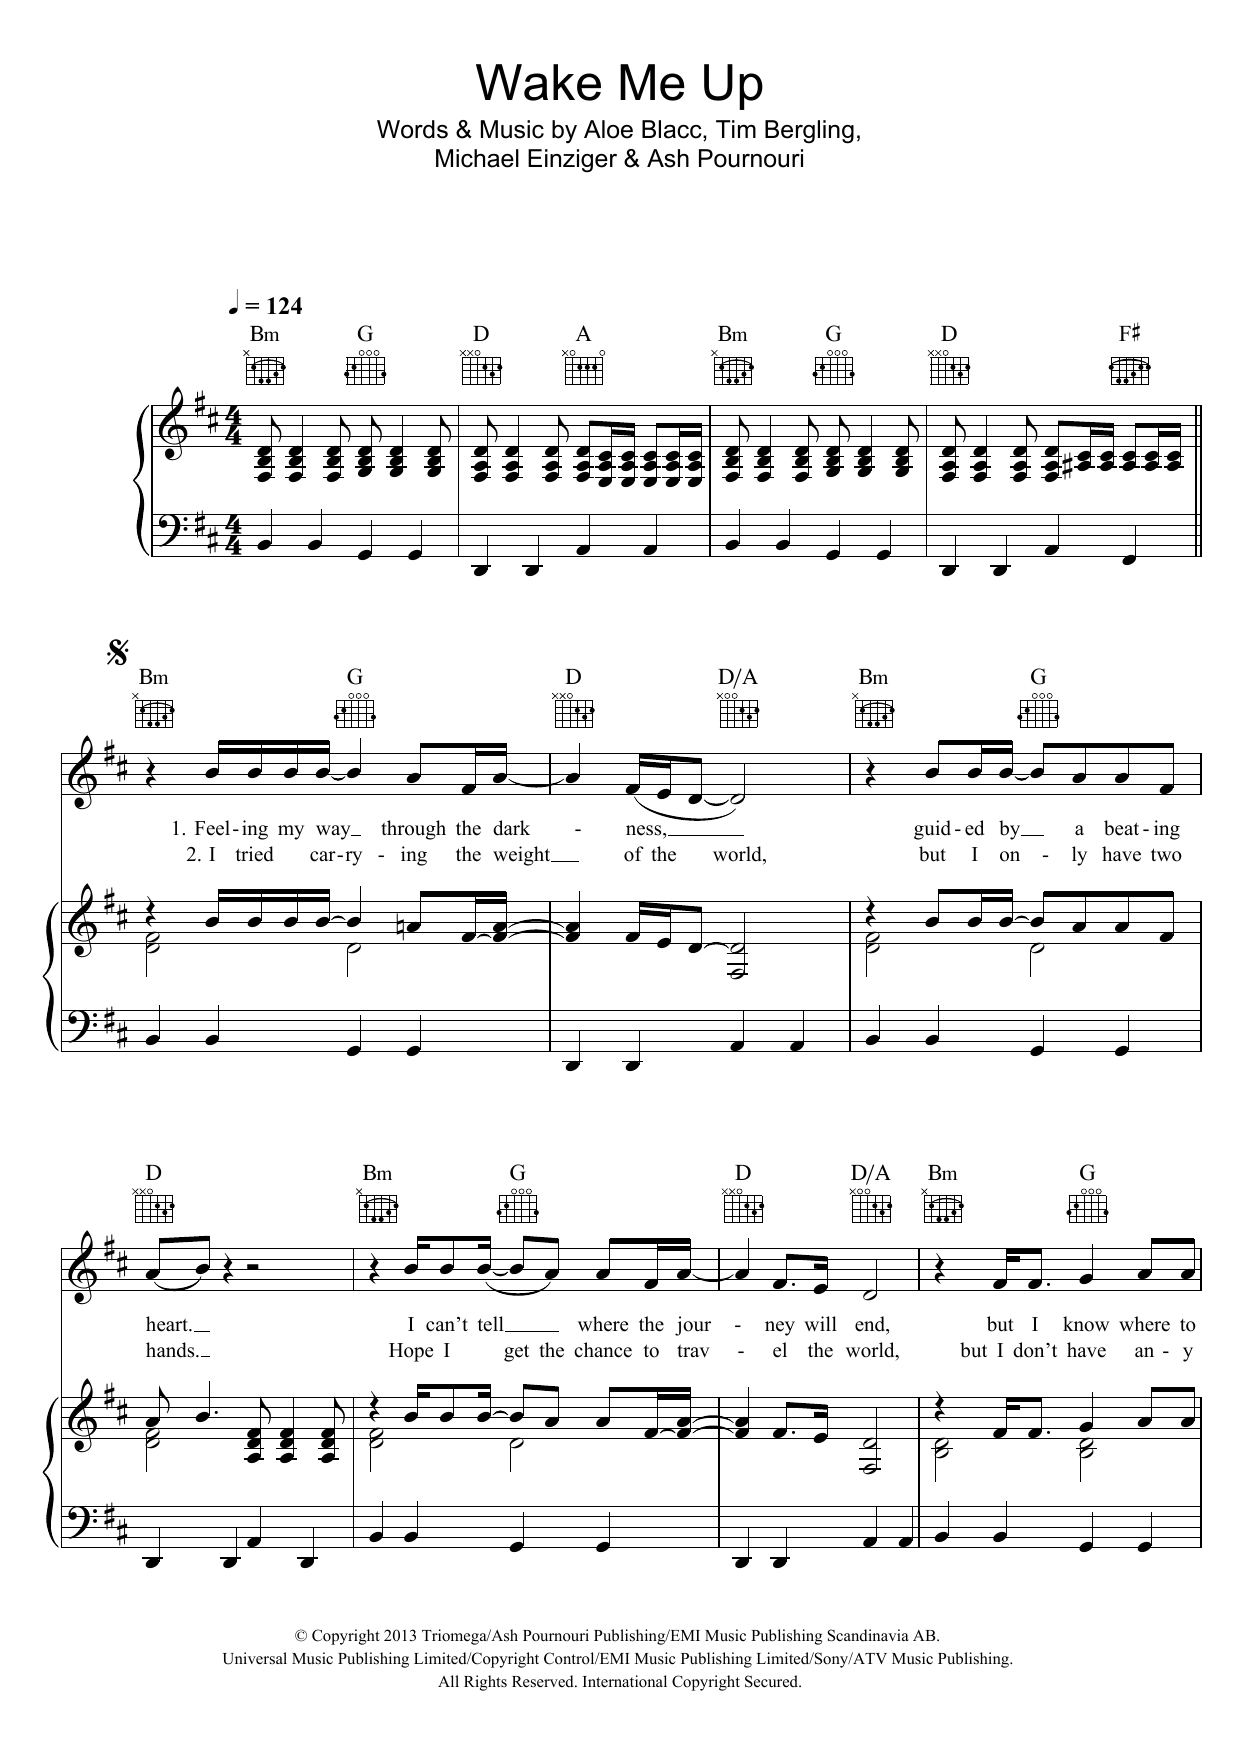 Avicii Wake Me Up Sheet Music Notes & Chords for Guitar Tab - Download or Print PDF